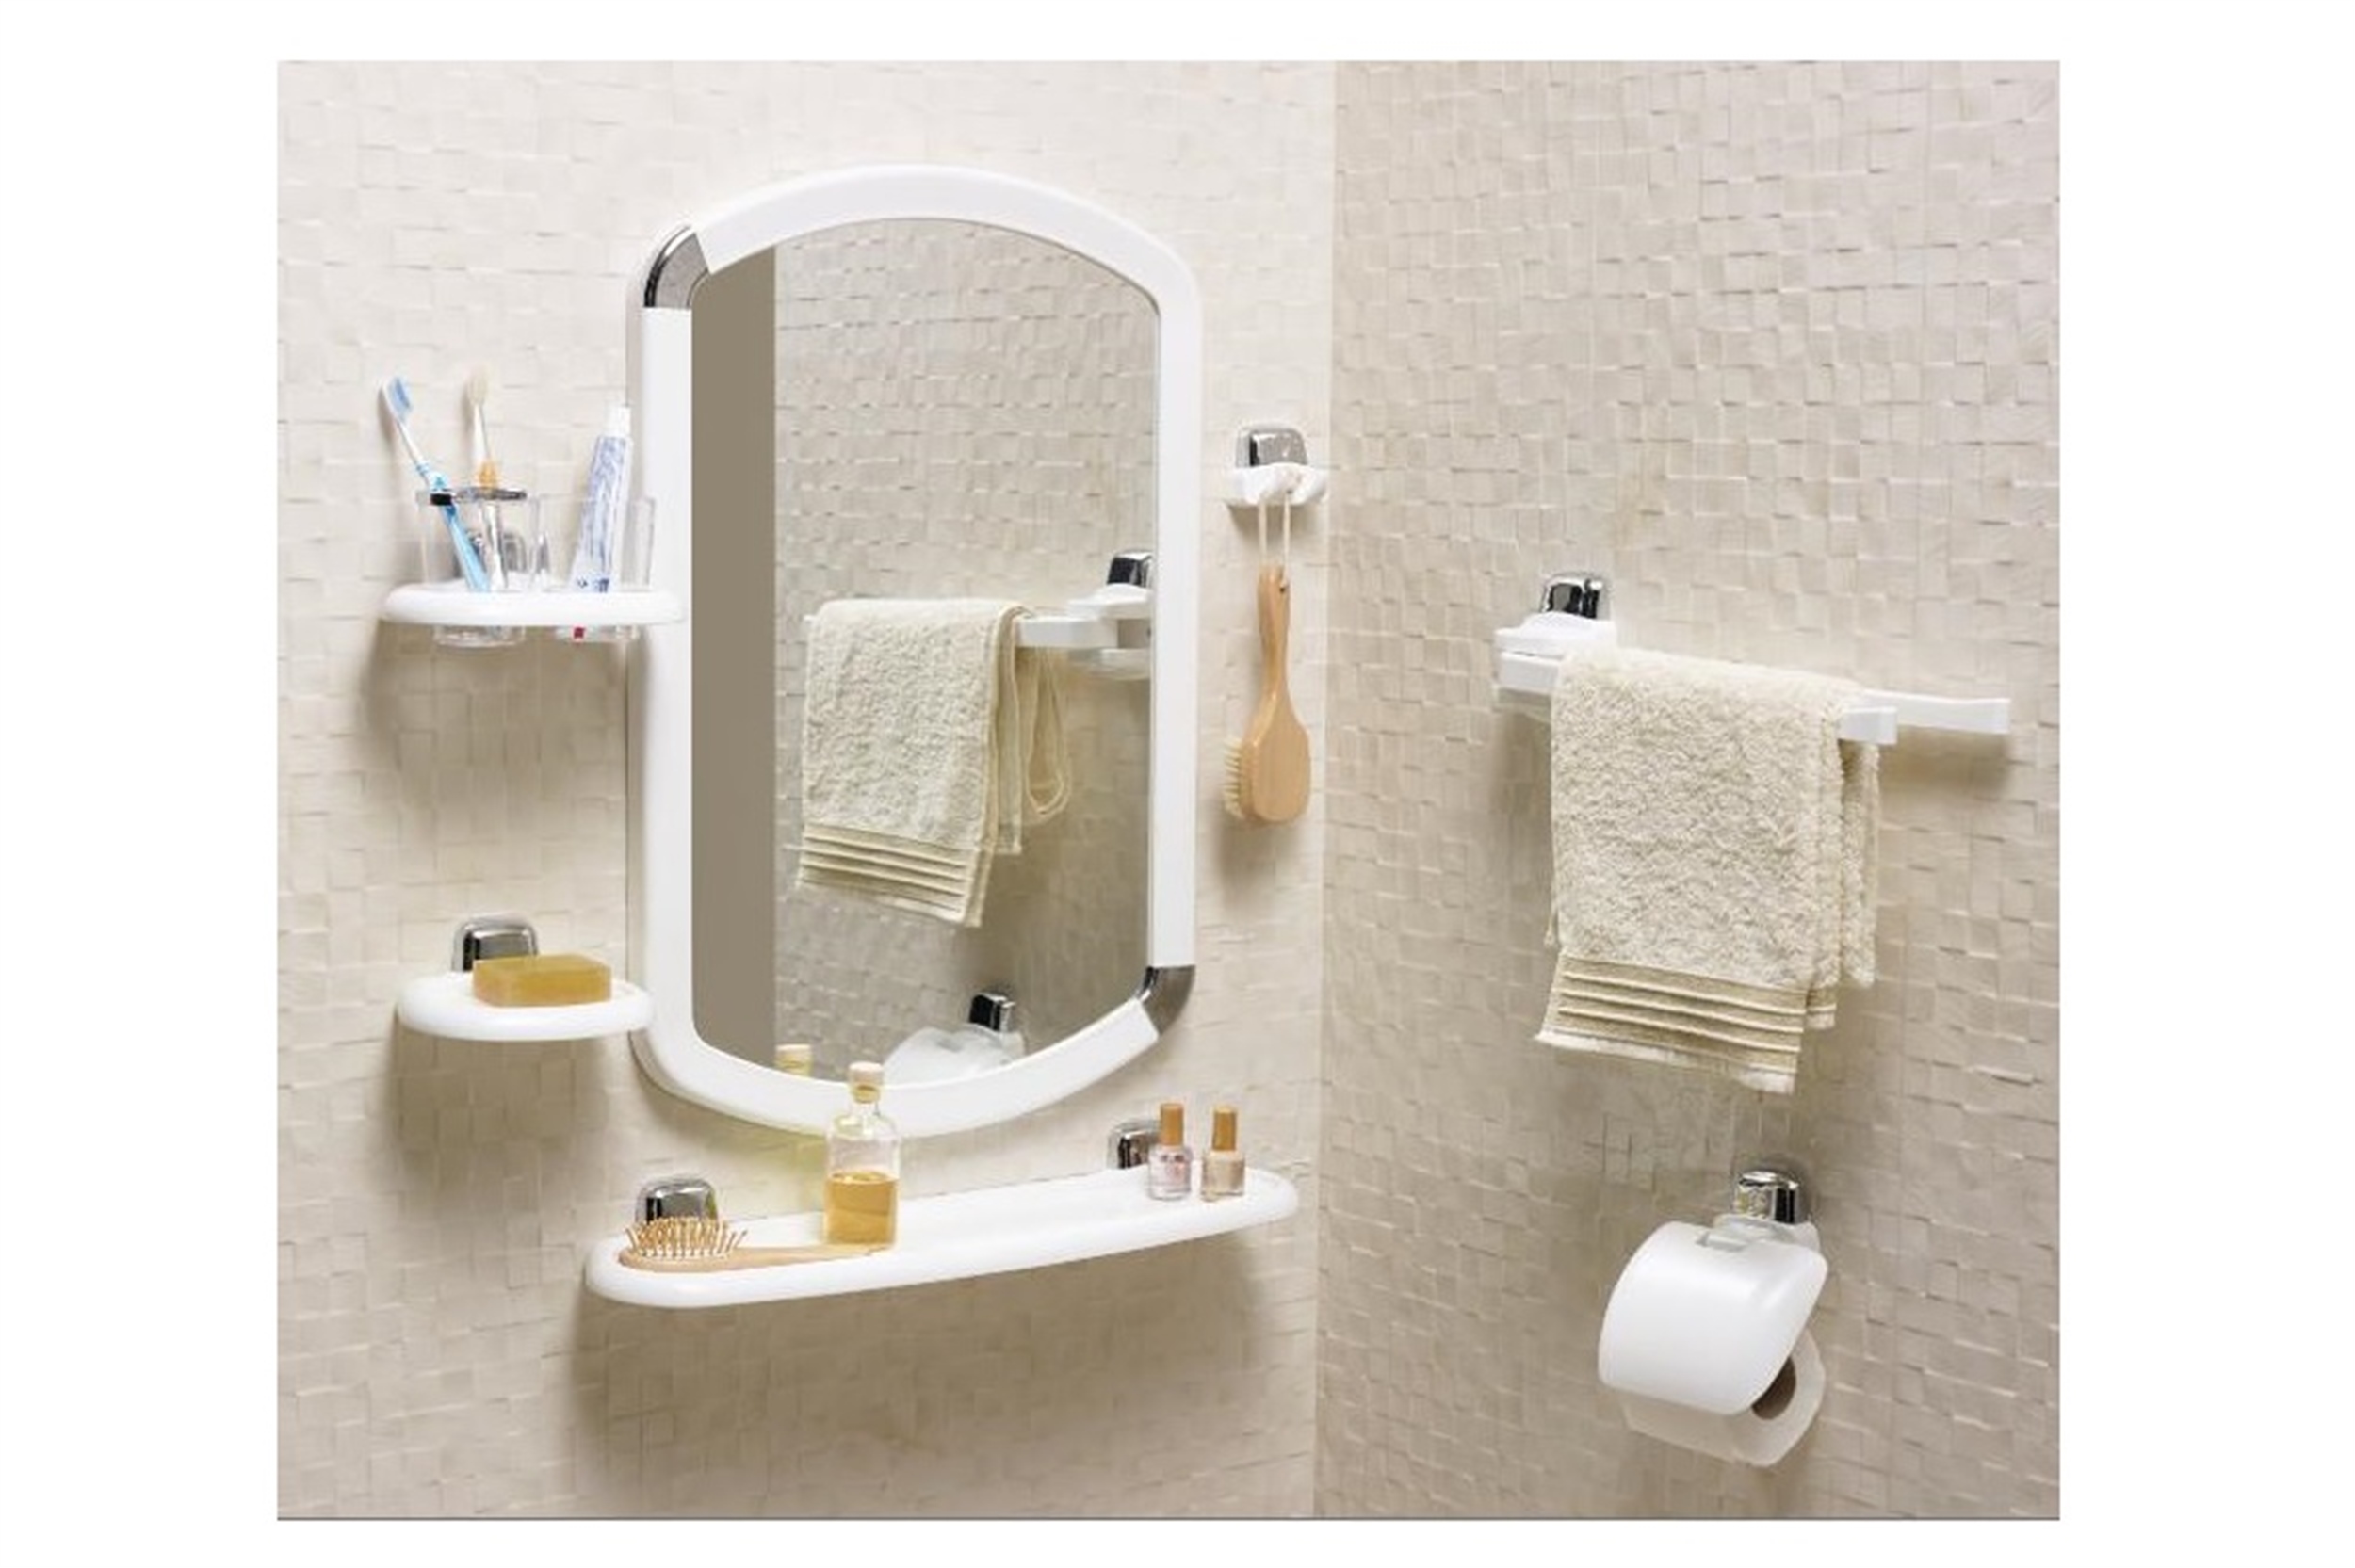 Набор для ванны зеркало. Аксессуары для ванной комнаты. Зеркало для ванной комнаты. Зеркало в ванную комнату с полкой. Набор для ванной комнаты.